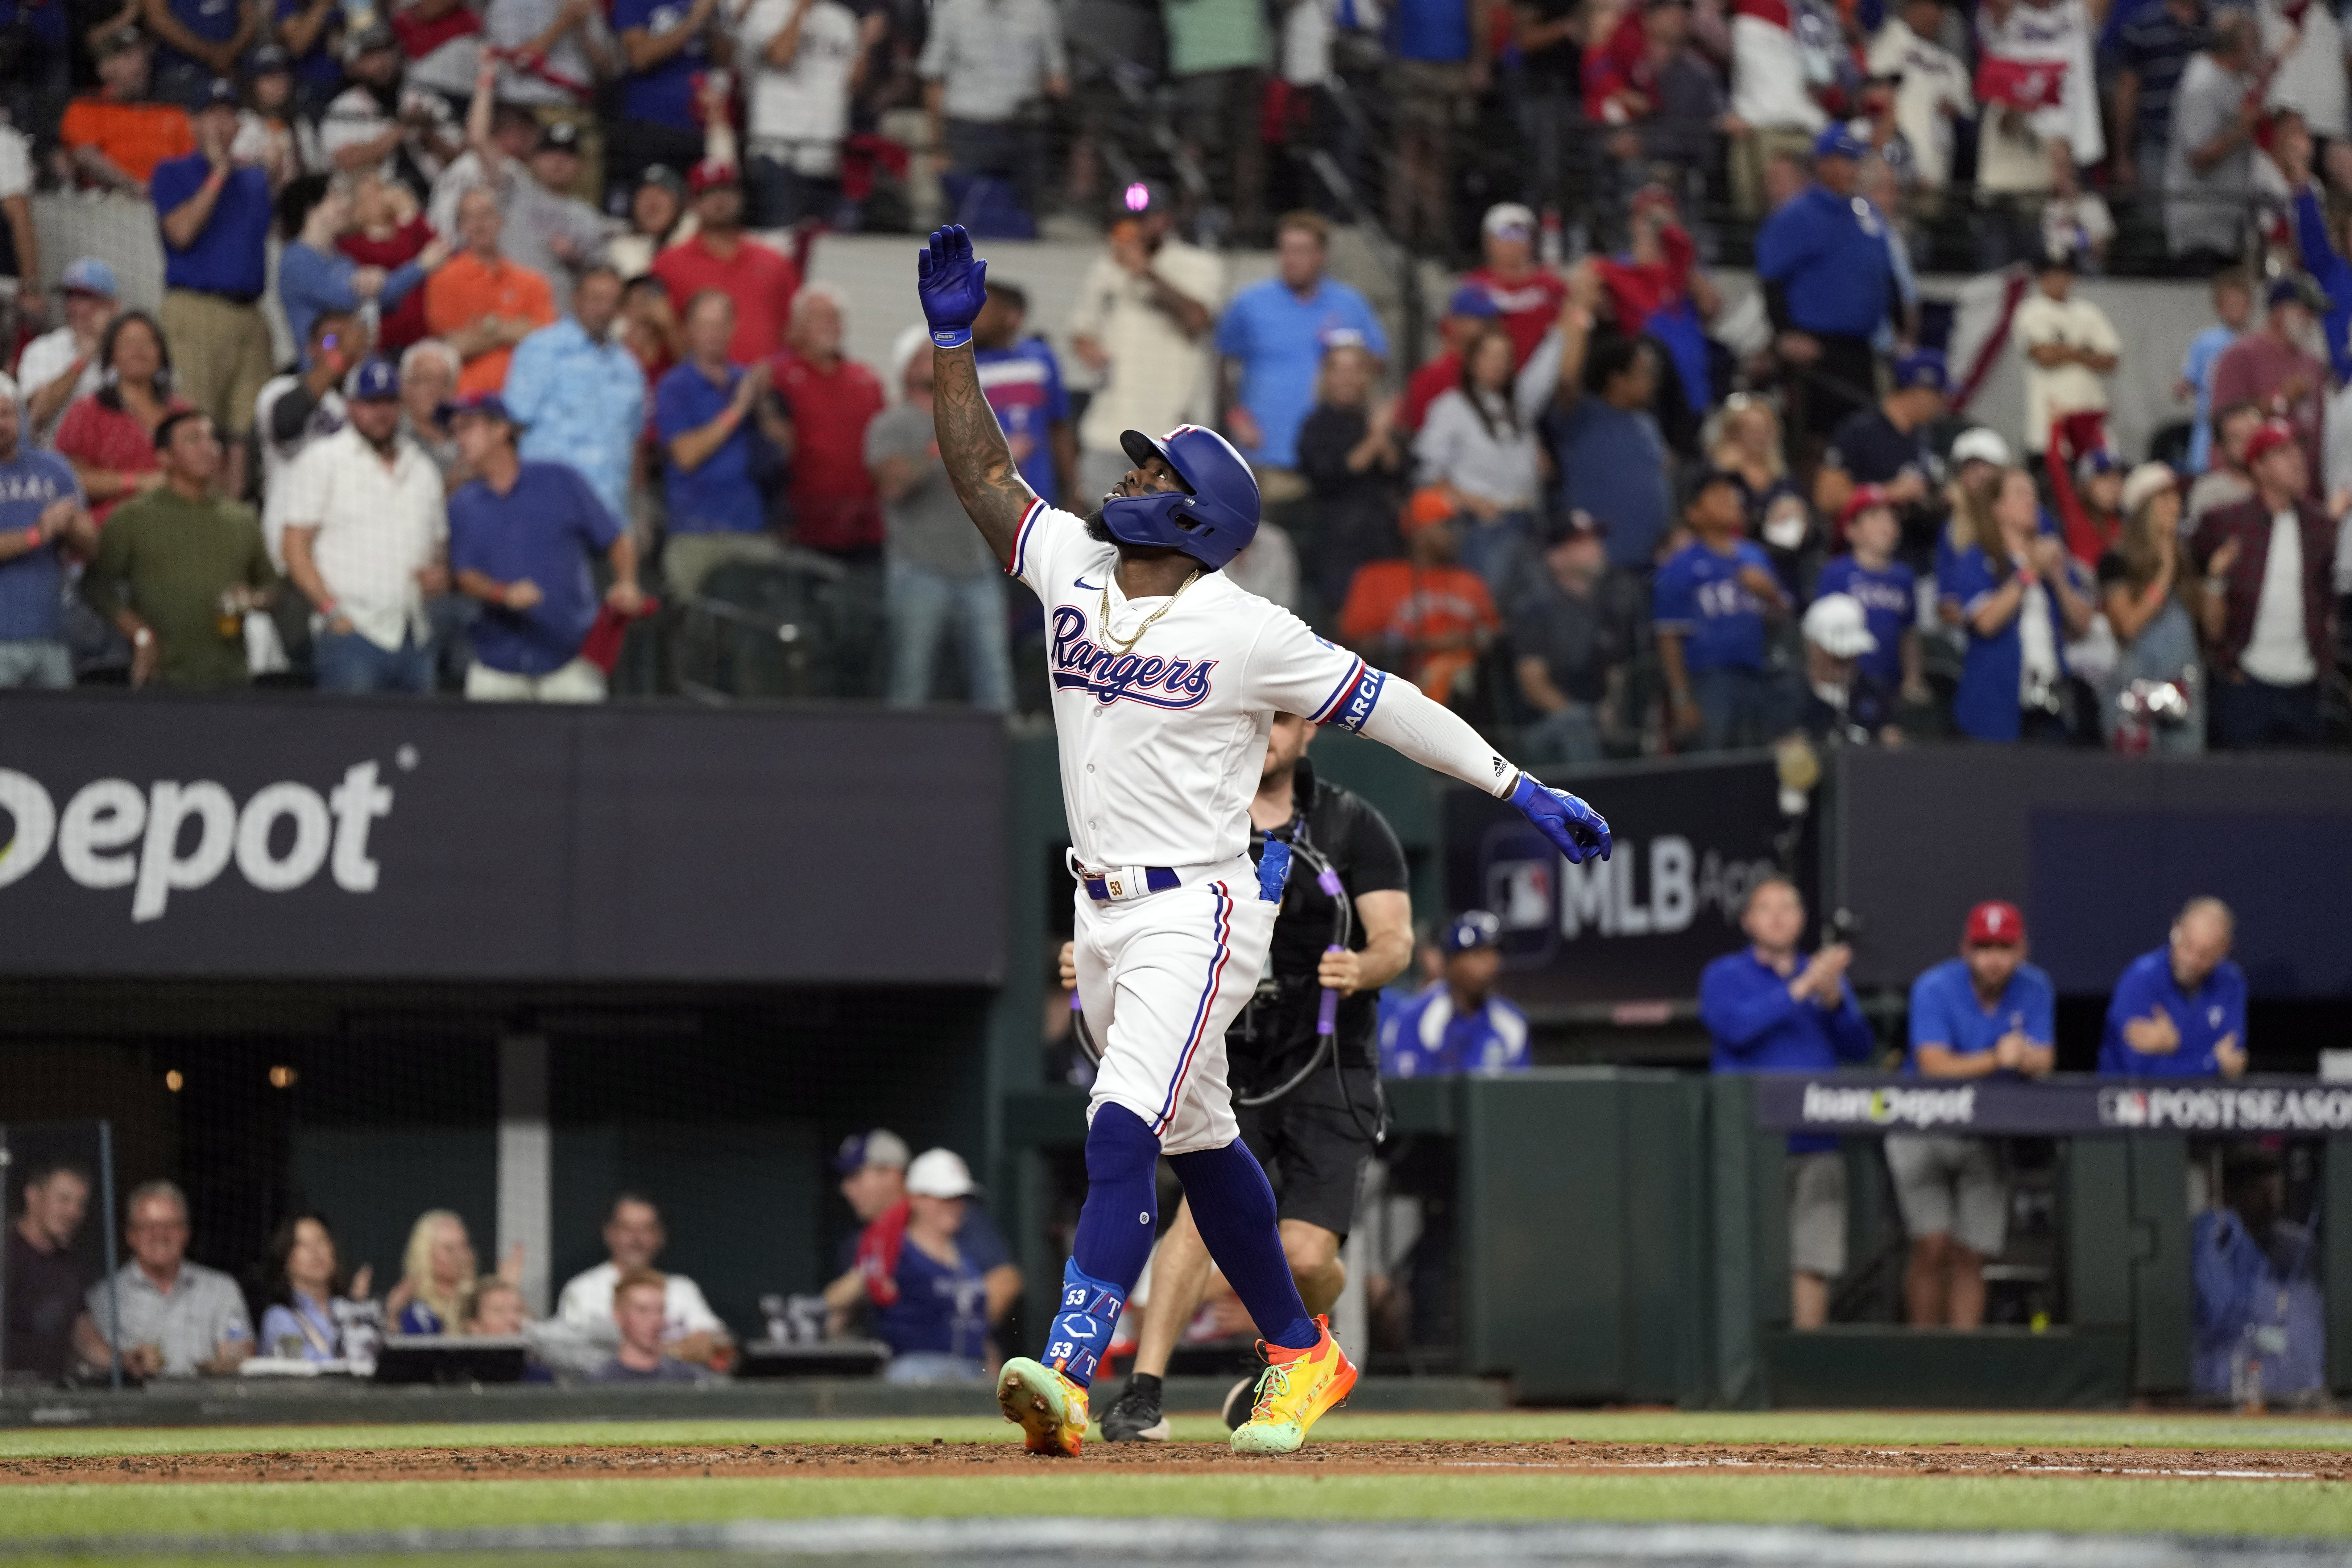 Watch: Jose Altuve hits three home runs as Astros clobber Rangers 